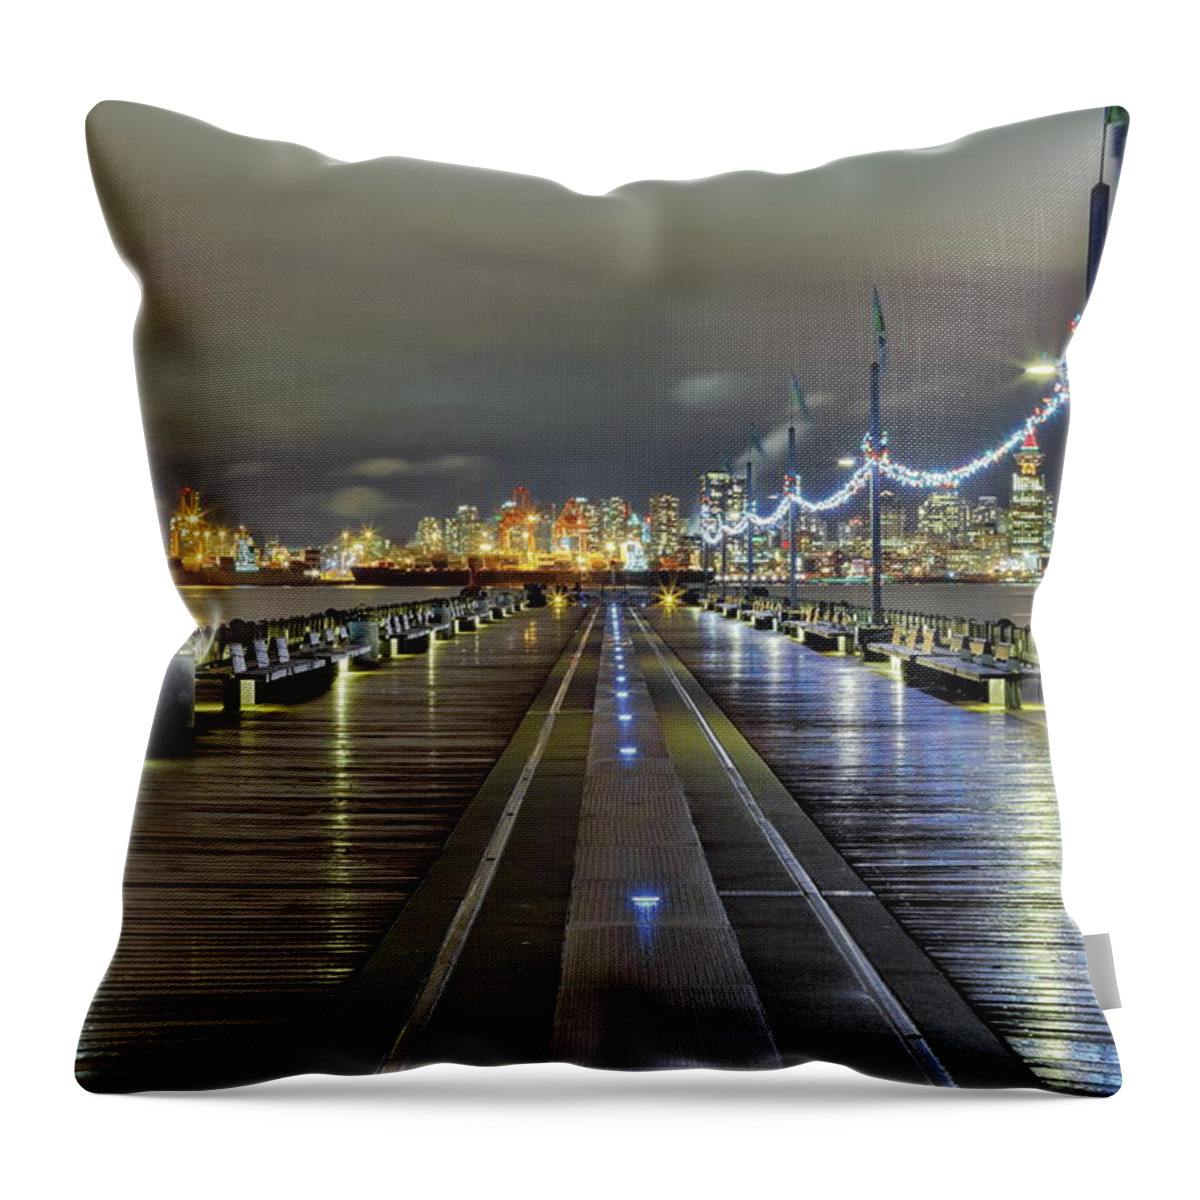 Alex Lyubar Throw Pillow featuring the pyrography Light rain on a Christmas night in a beautiful city by Alex Lyubar